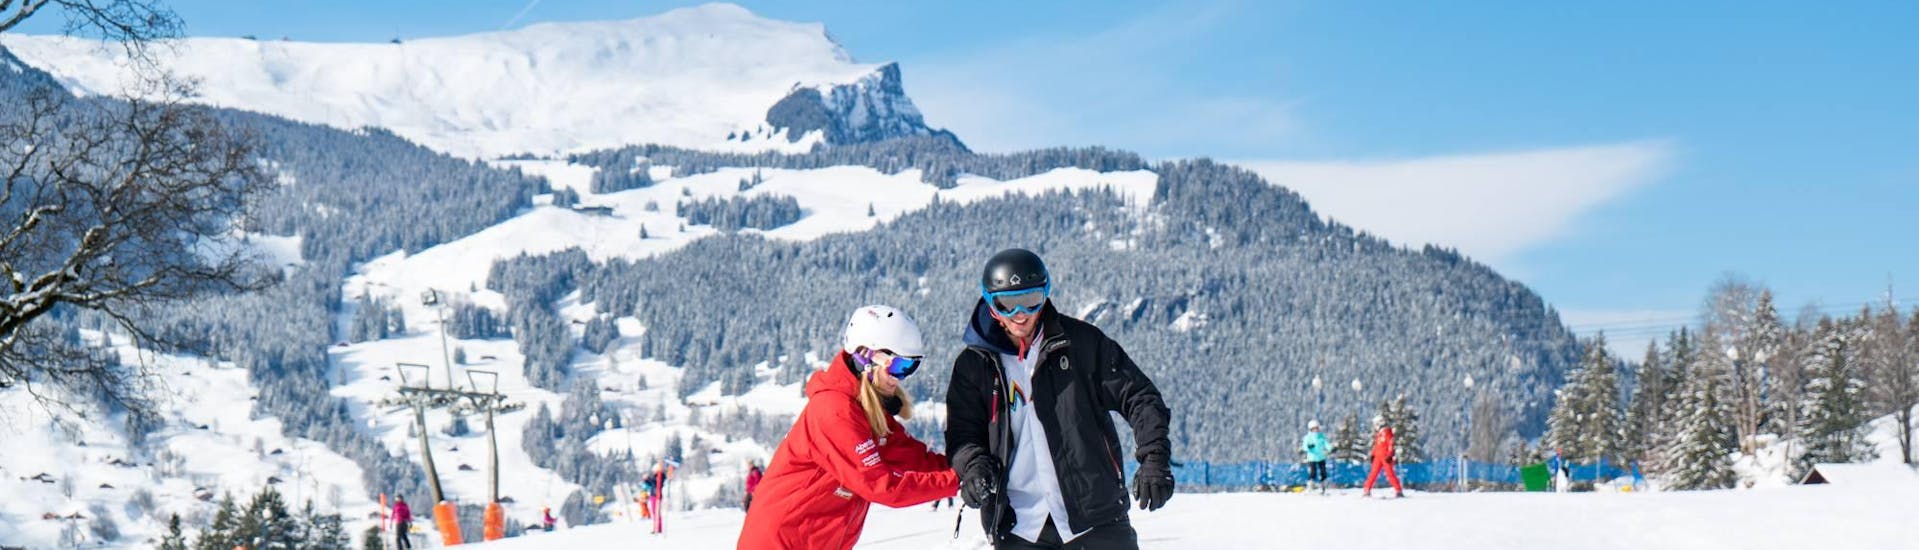 snowboarding-lessons-beginner-package-first-timers-outdoor-interlaken-hero